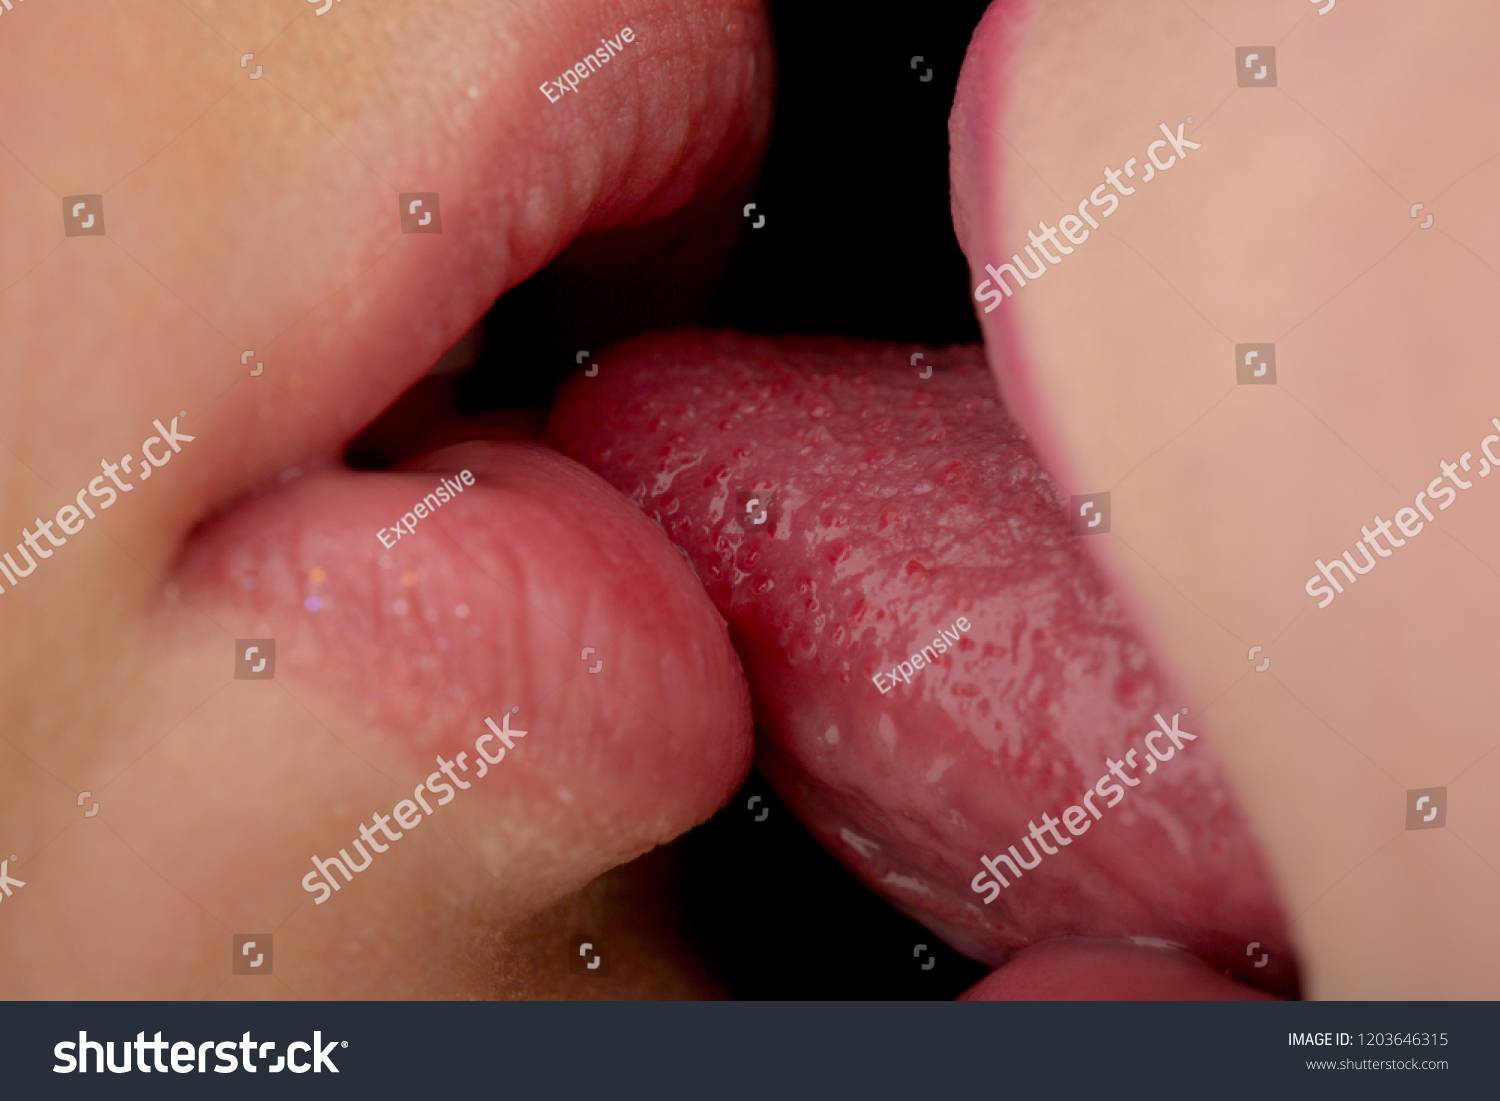 lesbians wet tongue kissing hot video picture